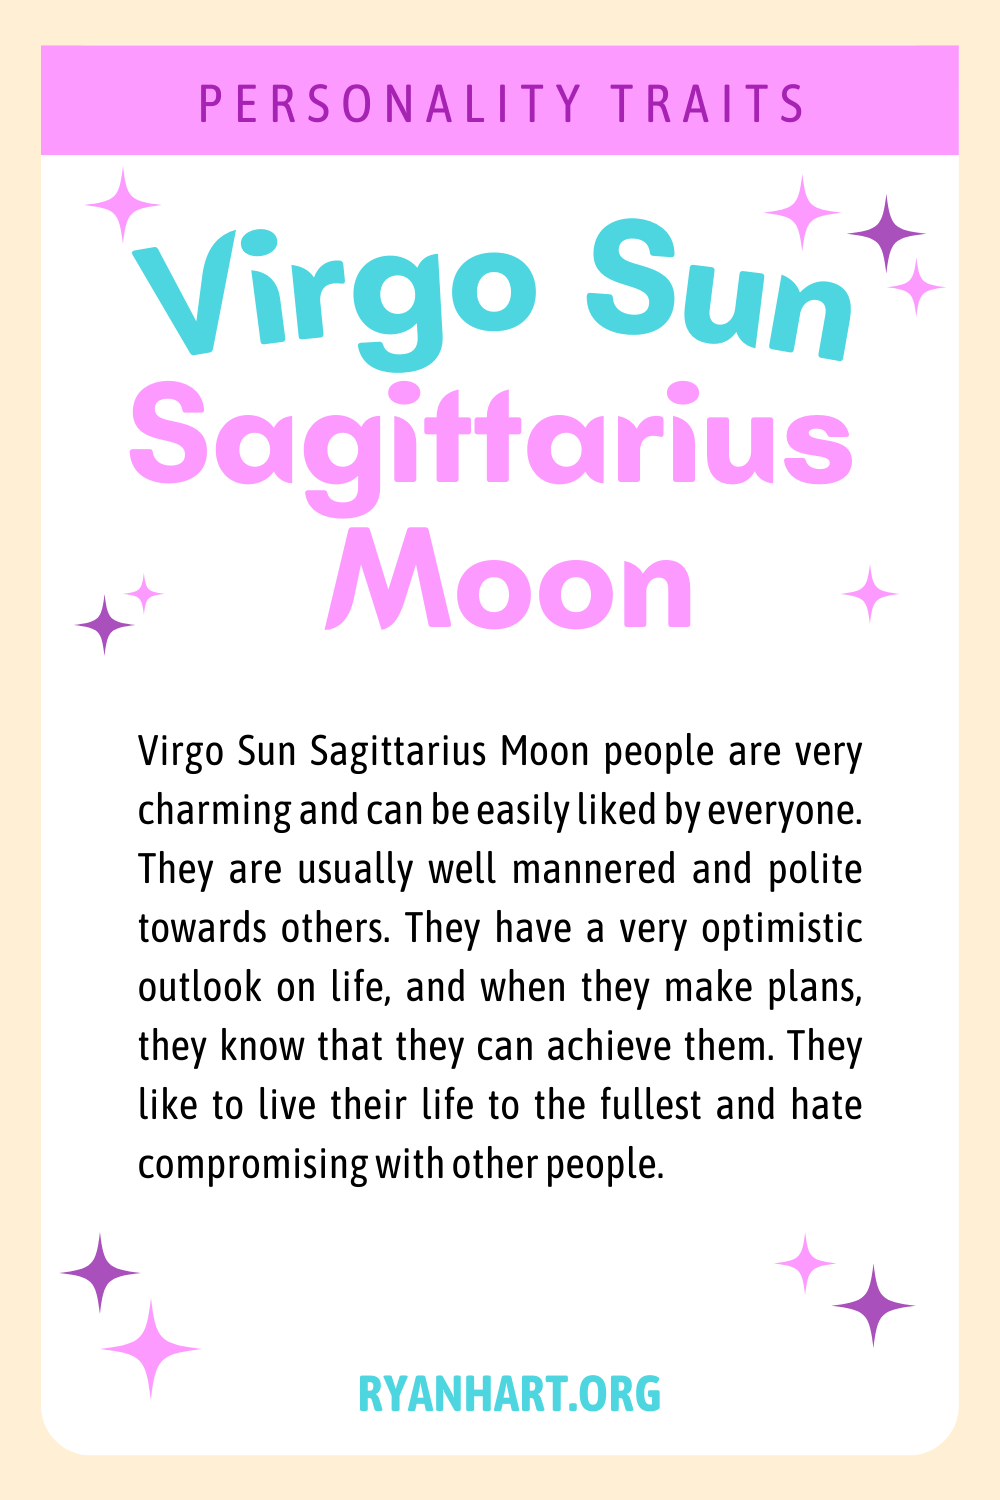 Virgo Sun Sagittarius Moon Description